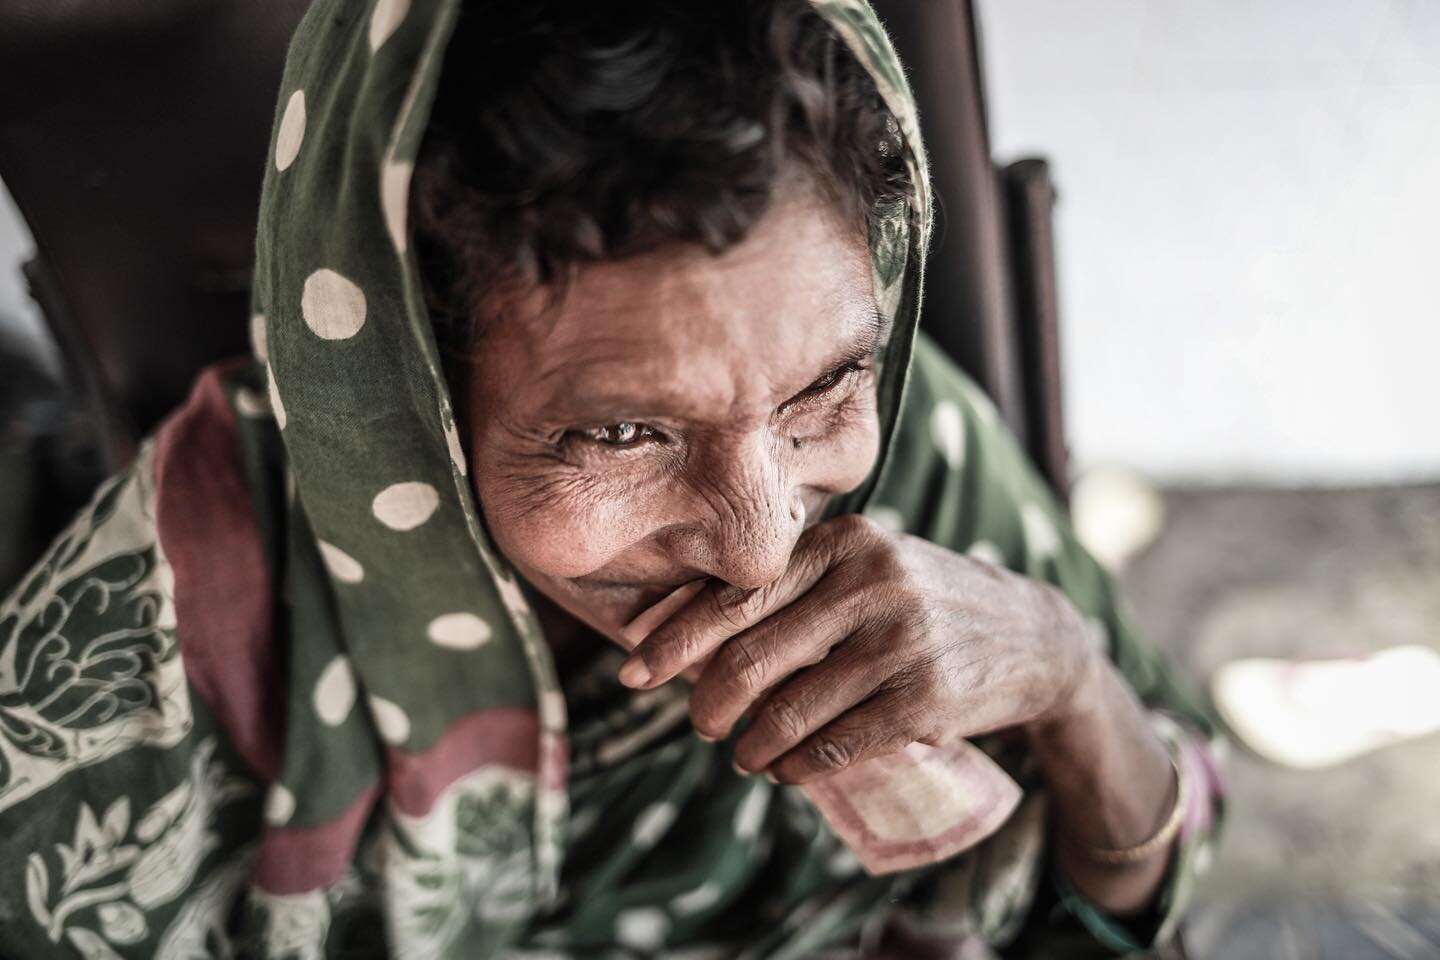 Ticket counter woman 
 
Photo by @nihab_rahman

#bangladesh
#bangladeshstories
#humansofbangladesh
__________________
#humanitarianaid  #humaninterest
#unhcr_bgd #unicefbangladesh  #coxsbazar #aidworker #documentary  #candidchildhood #bbc #worldpress